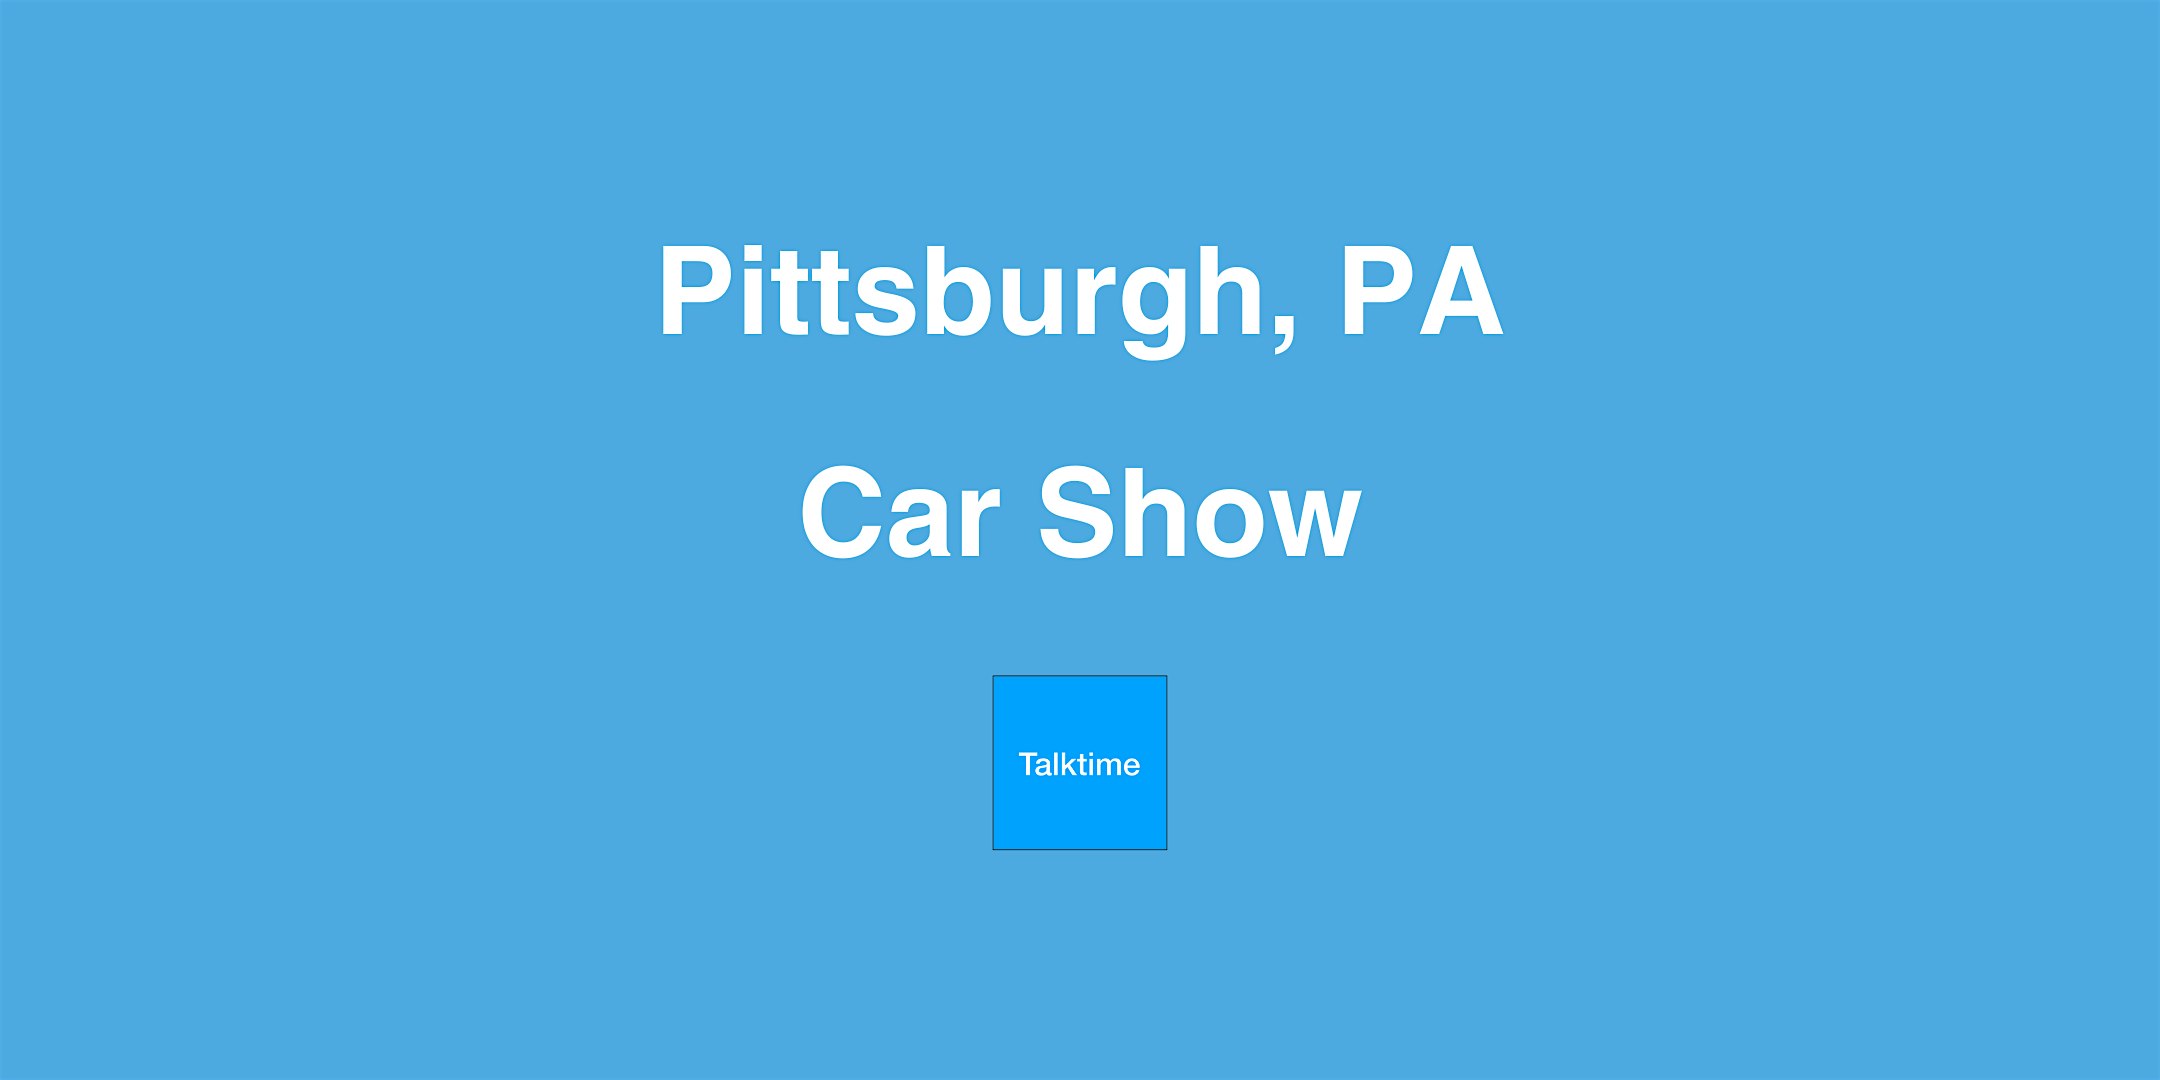 Car Show - Pittsburgh